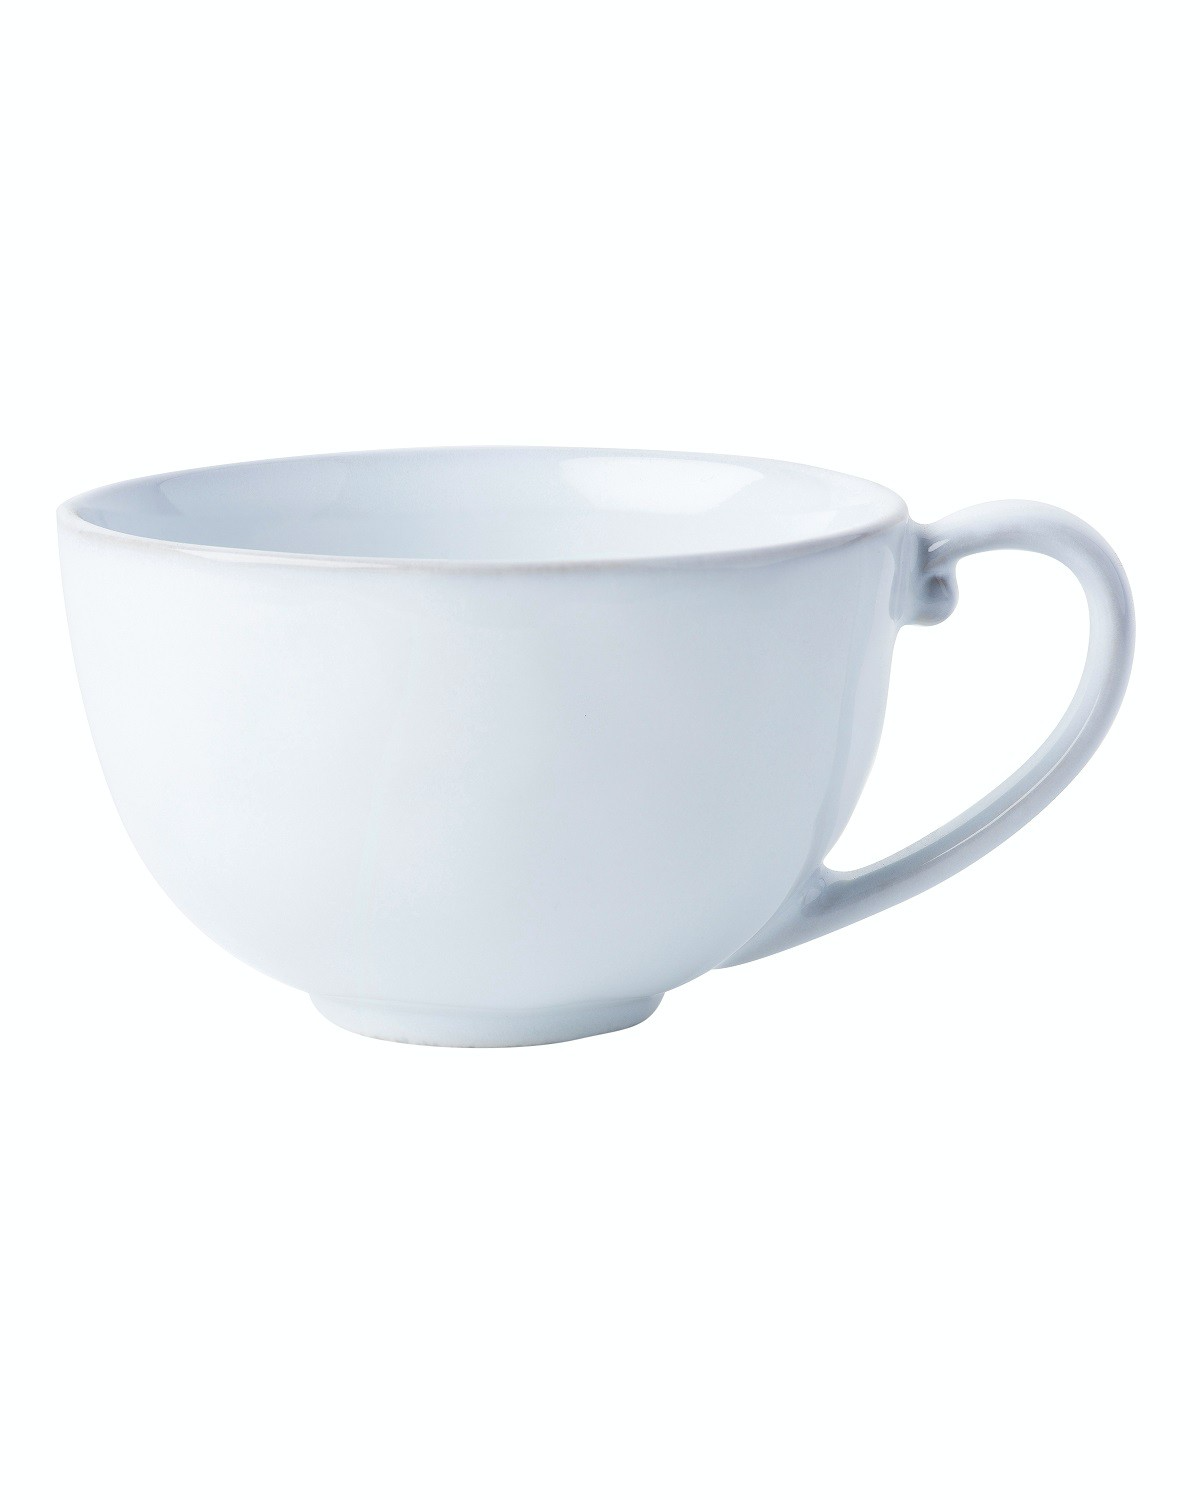 Quotidien White Truffle Tea/Coffee Cup